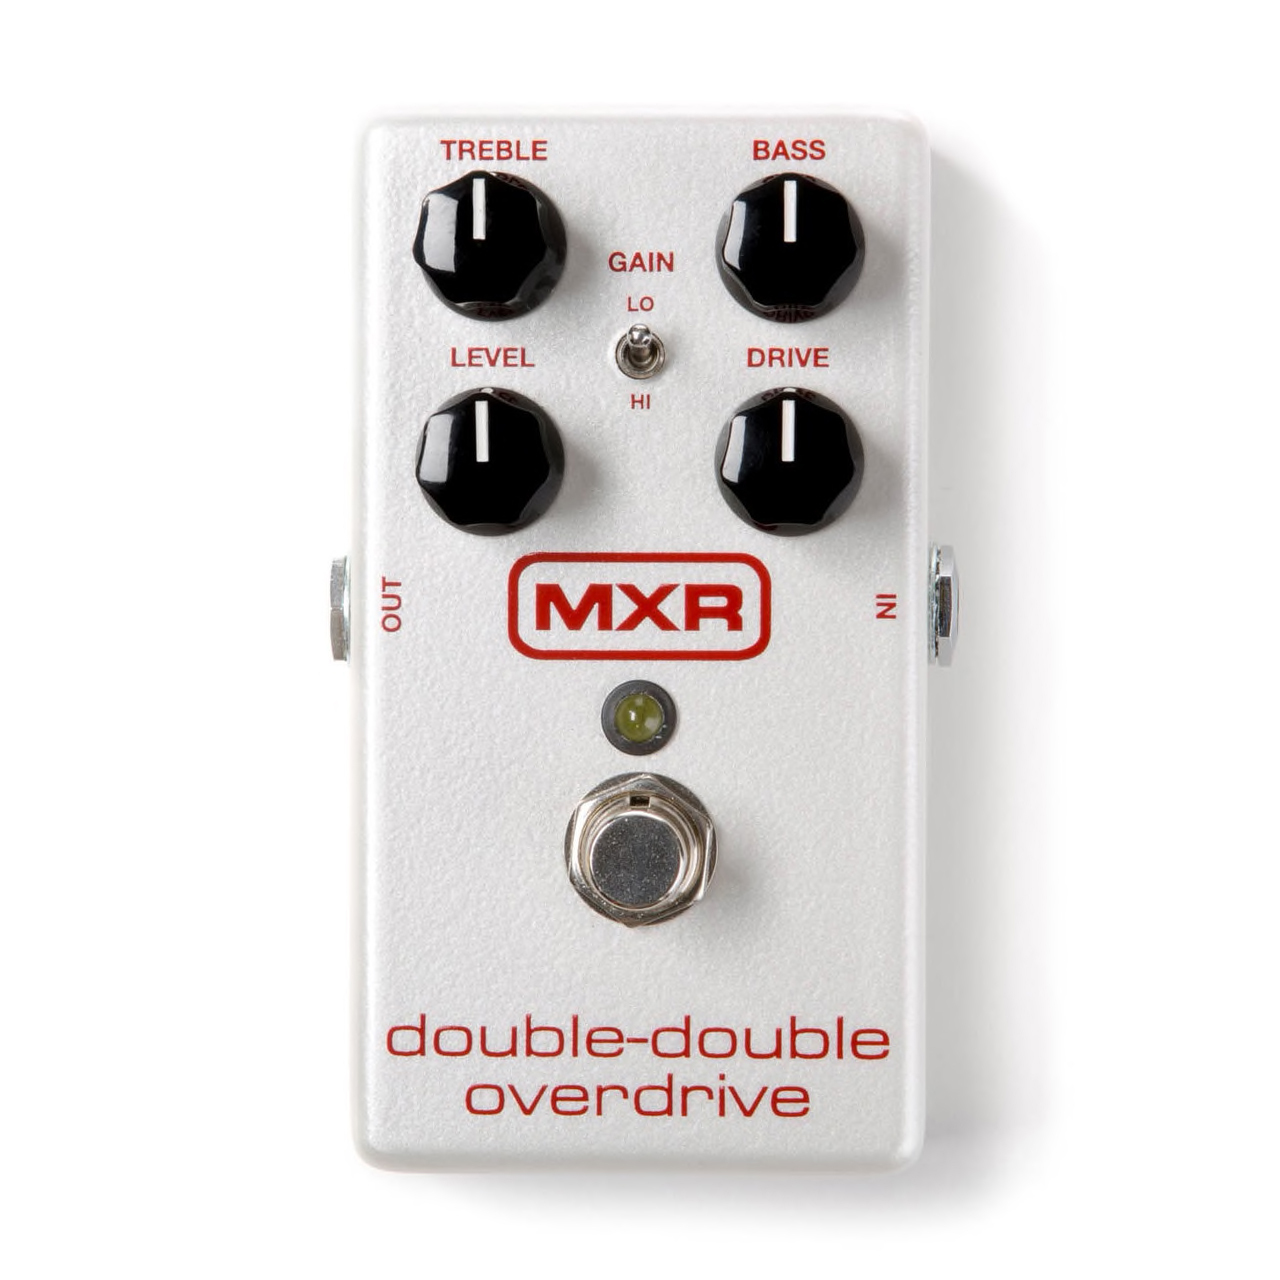 Mxr Double-Double Overdrive